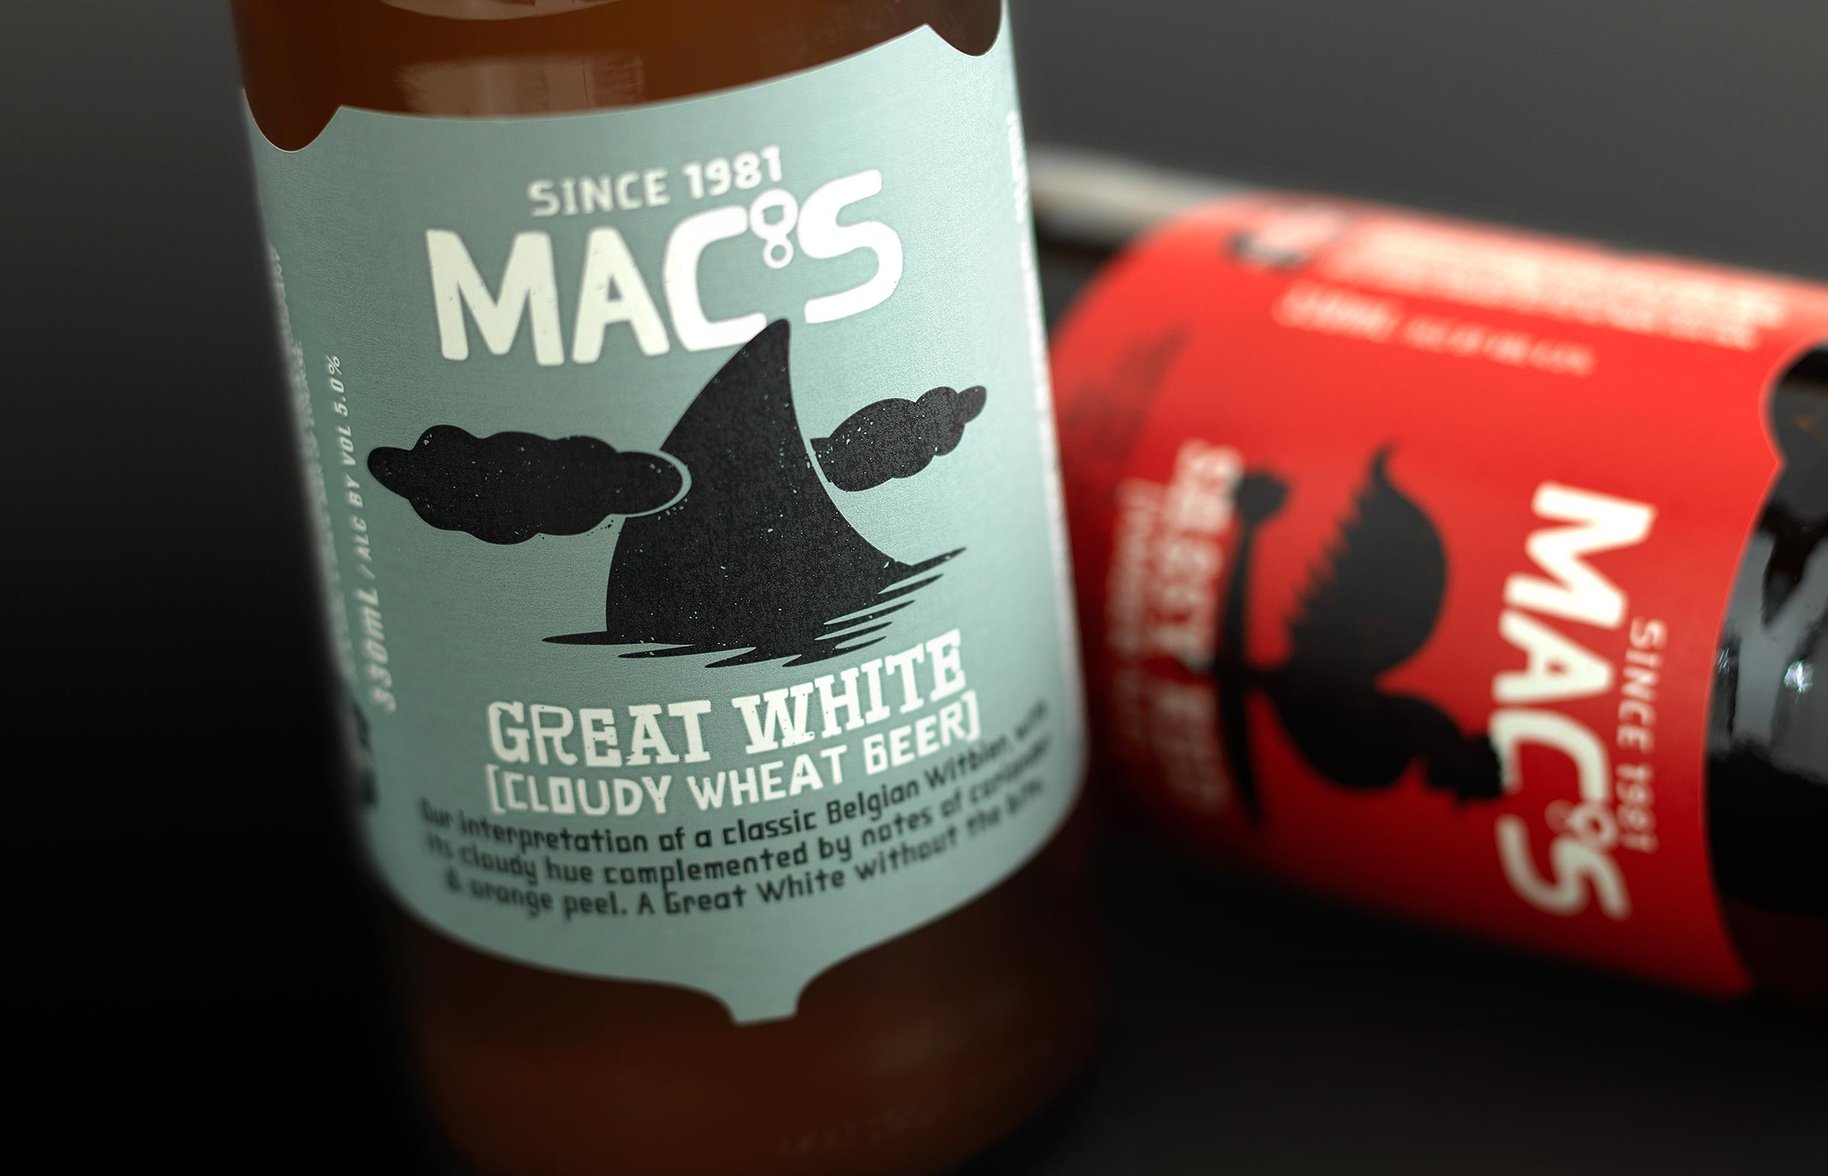 Macs Beer bottle details packaging